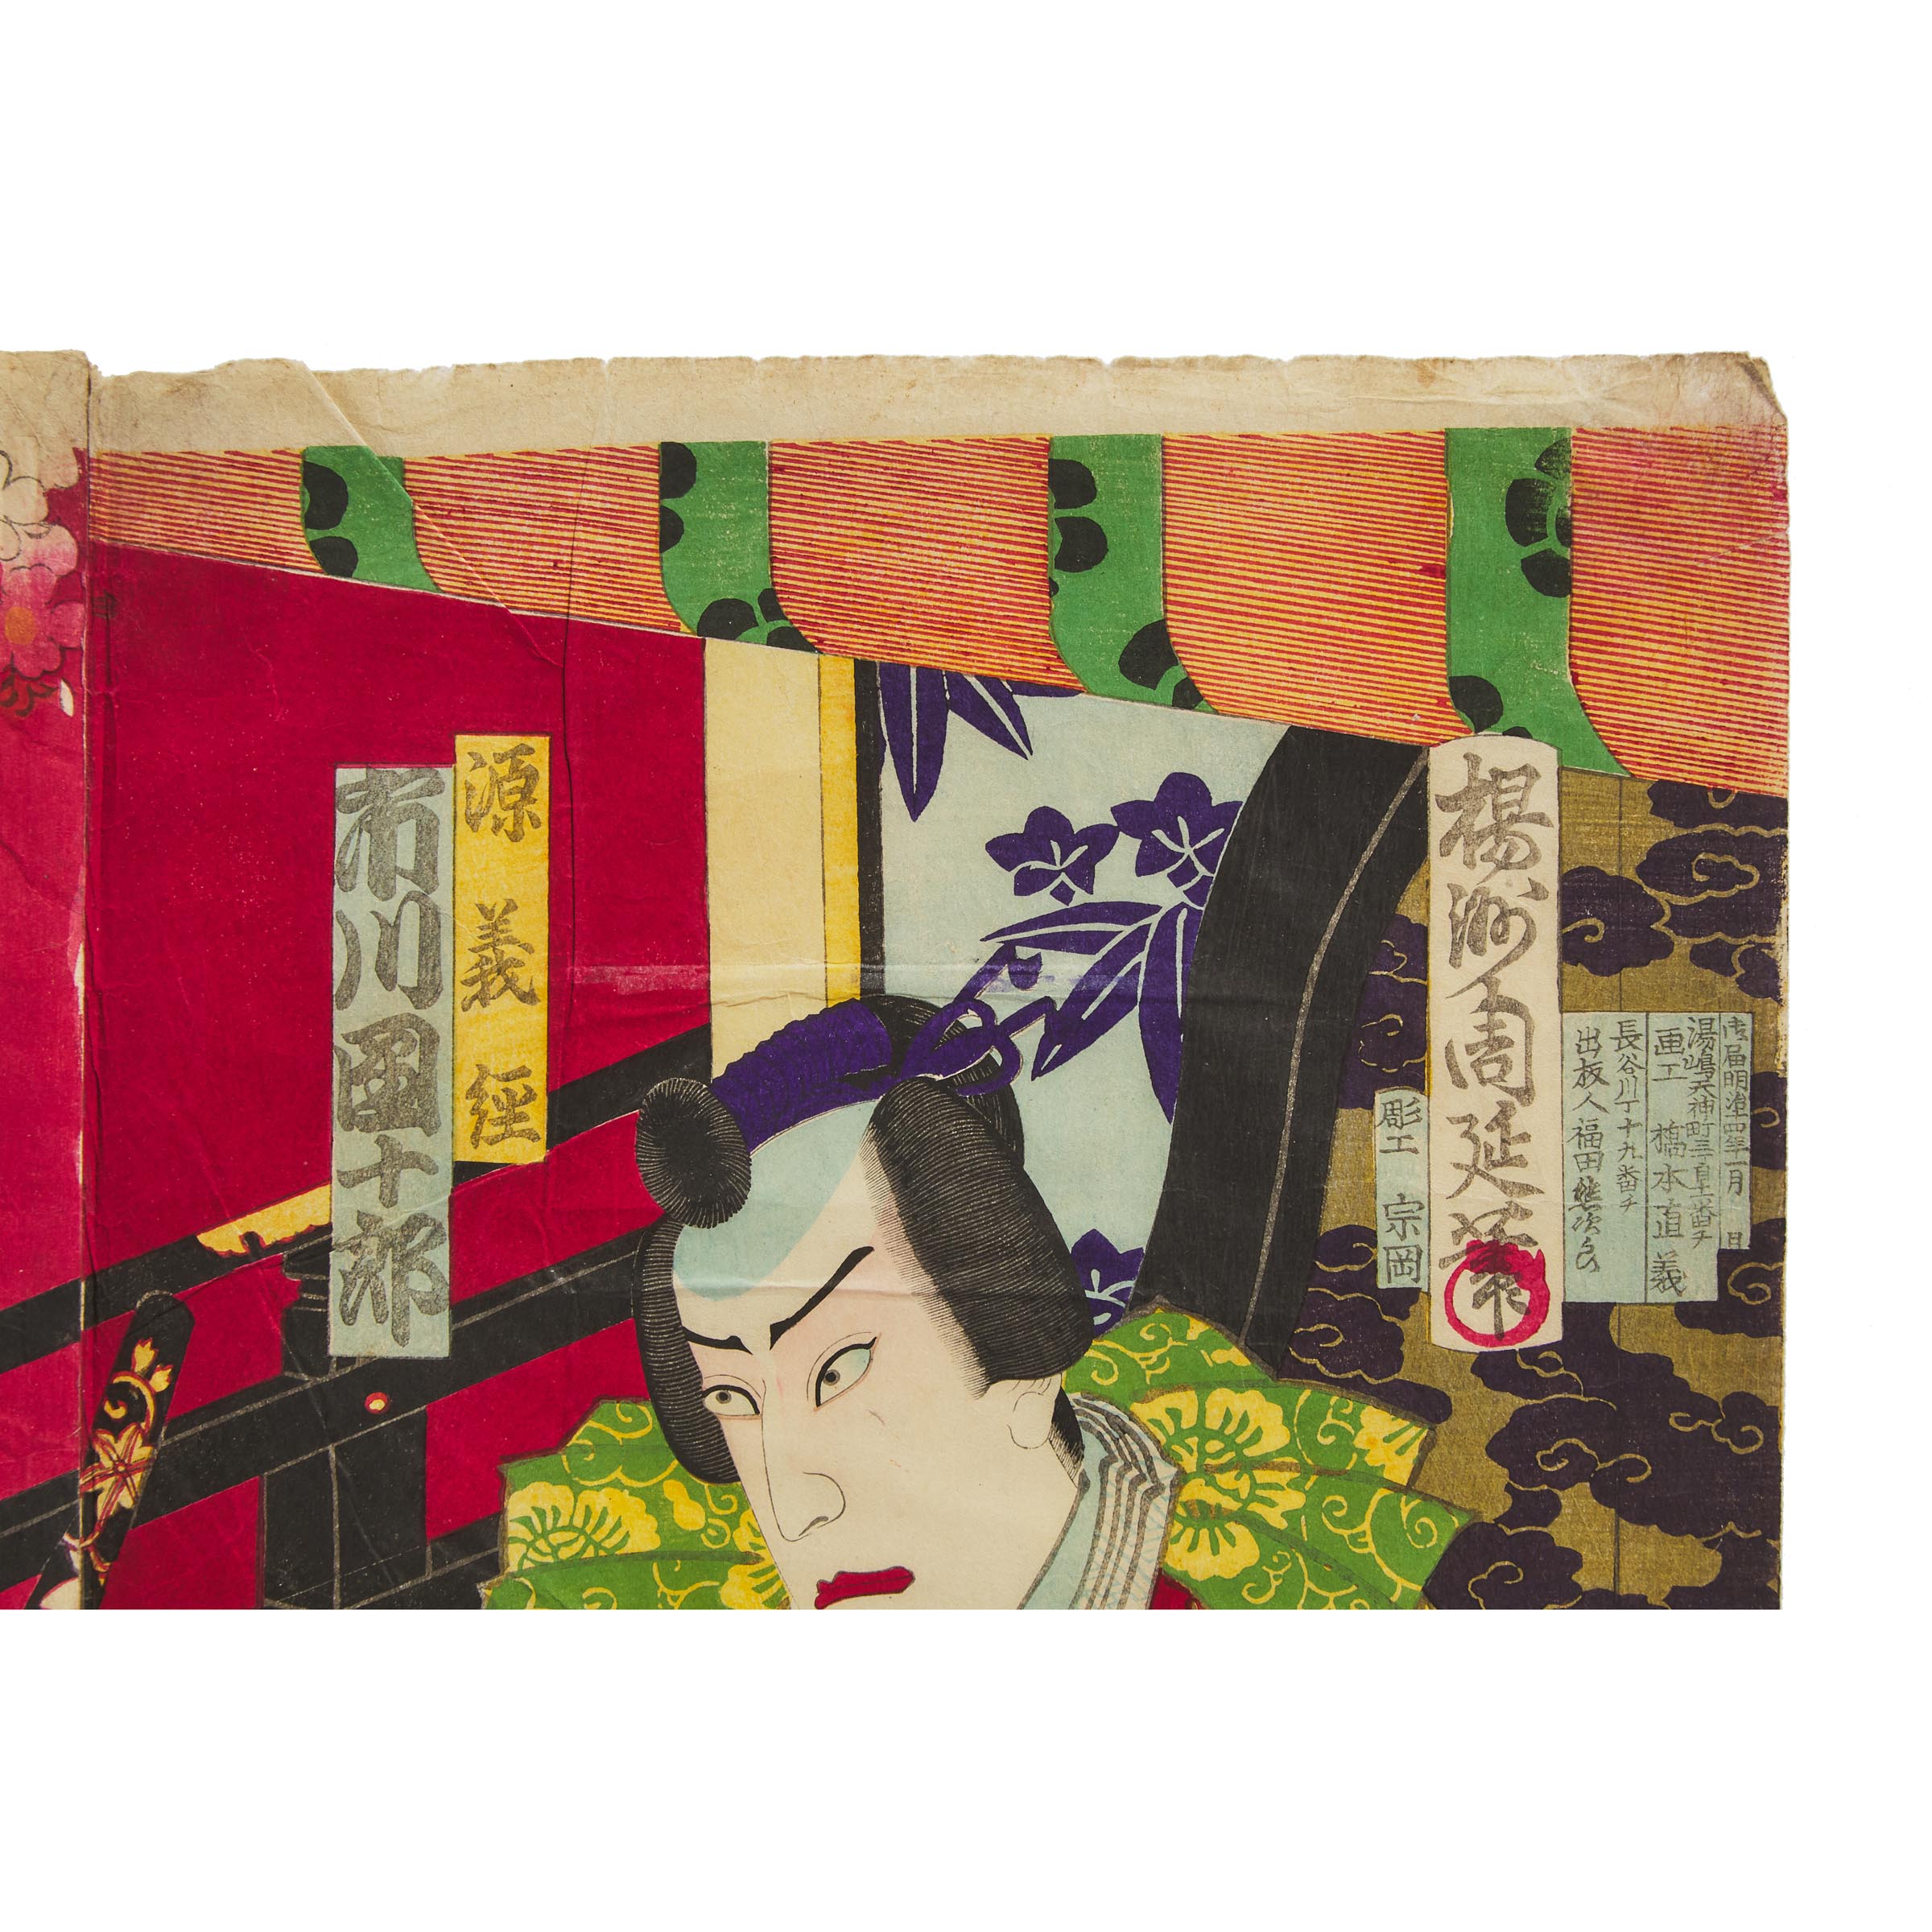 Utagawa Kunisada (Toyokuni III, 1786-1865), Yoshu (Toyohara) Chikanobu (1838-1912), A Group of Three Ukiyo-e Woodblock Prints, 19th Century